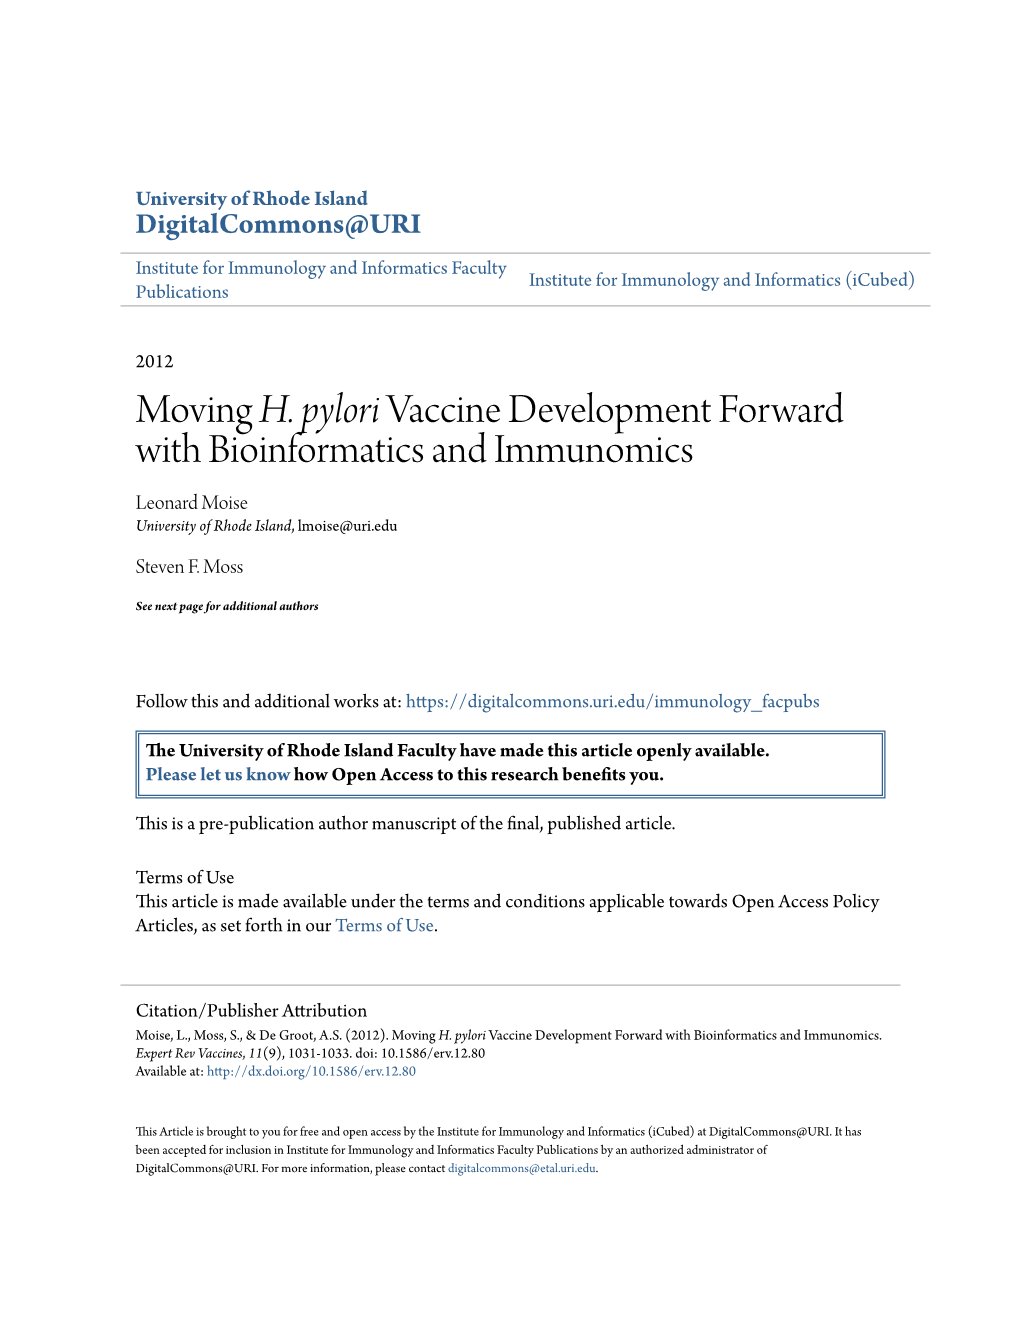 Moving H. Pylori Vaccine Development Forward with Bioinformatics and Immunomics Leonard Moise University of Rhode Island, Lmoise@Uri.Edu